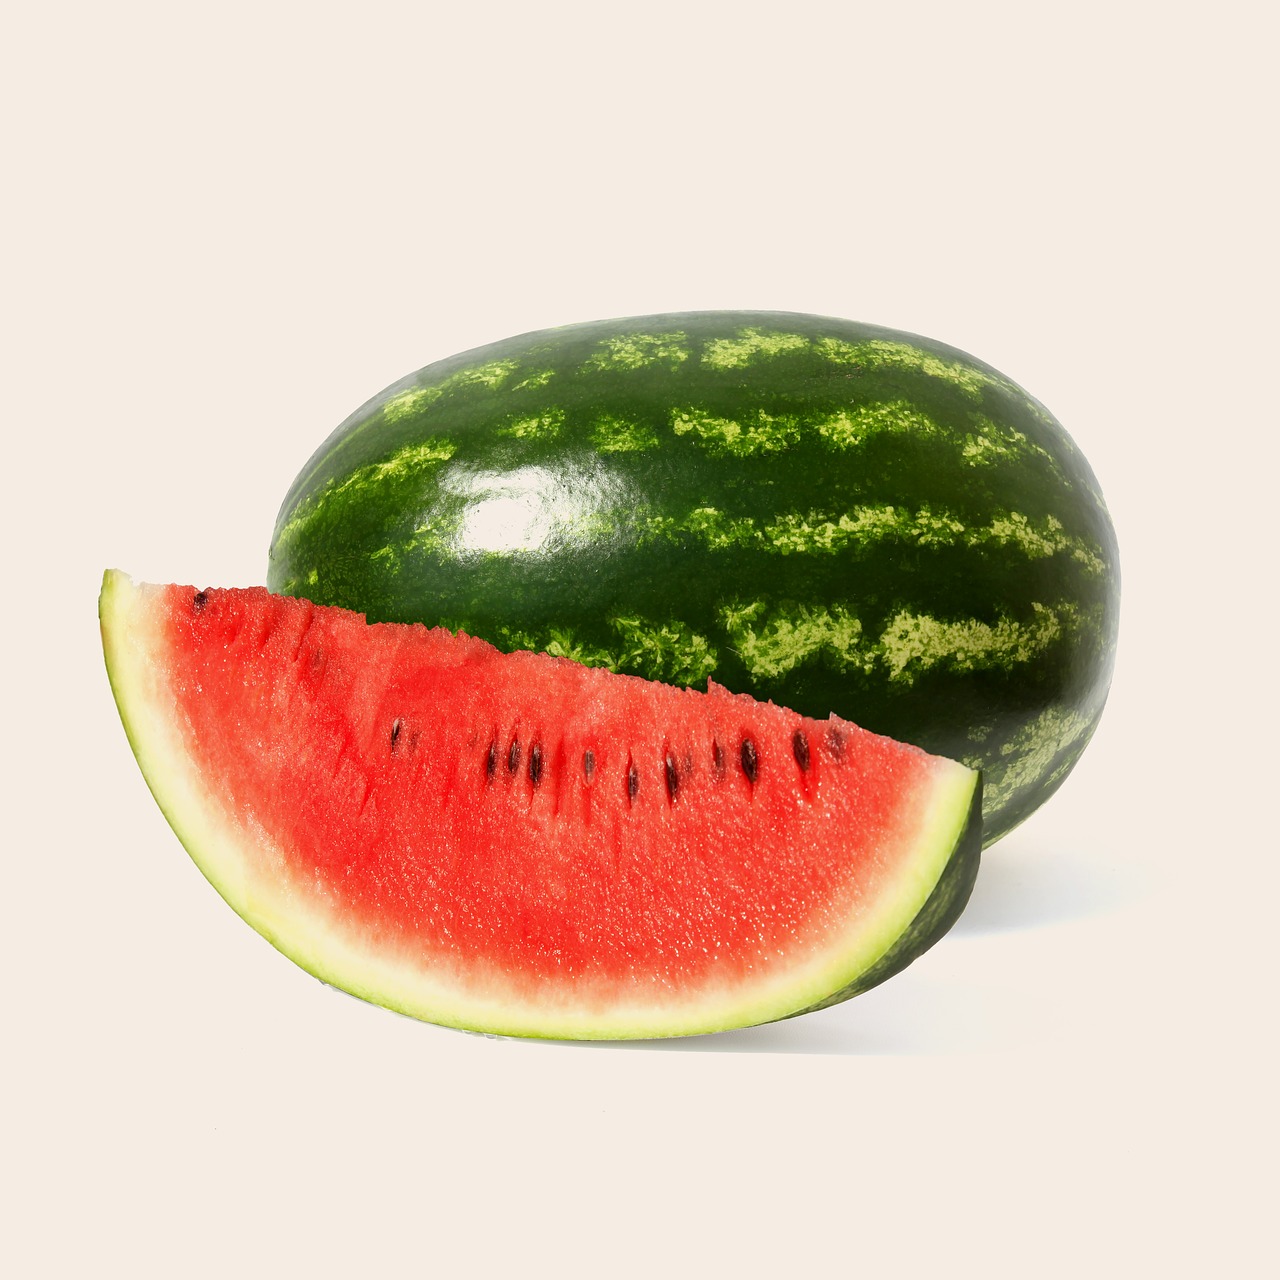 A whole watermelon and a cut watermelon